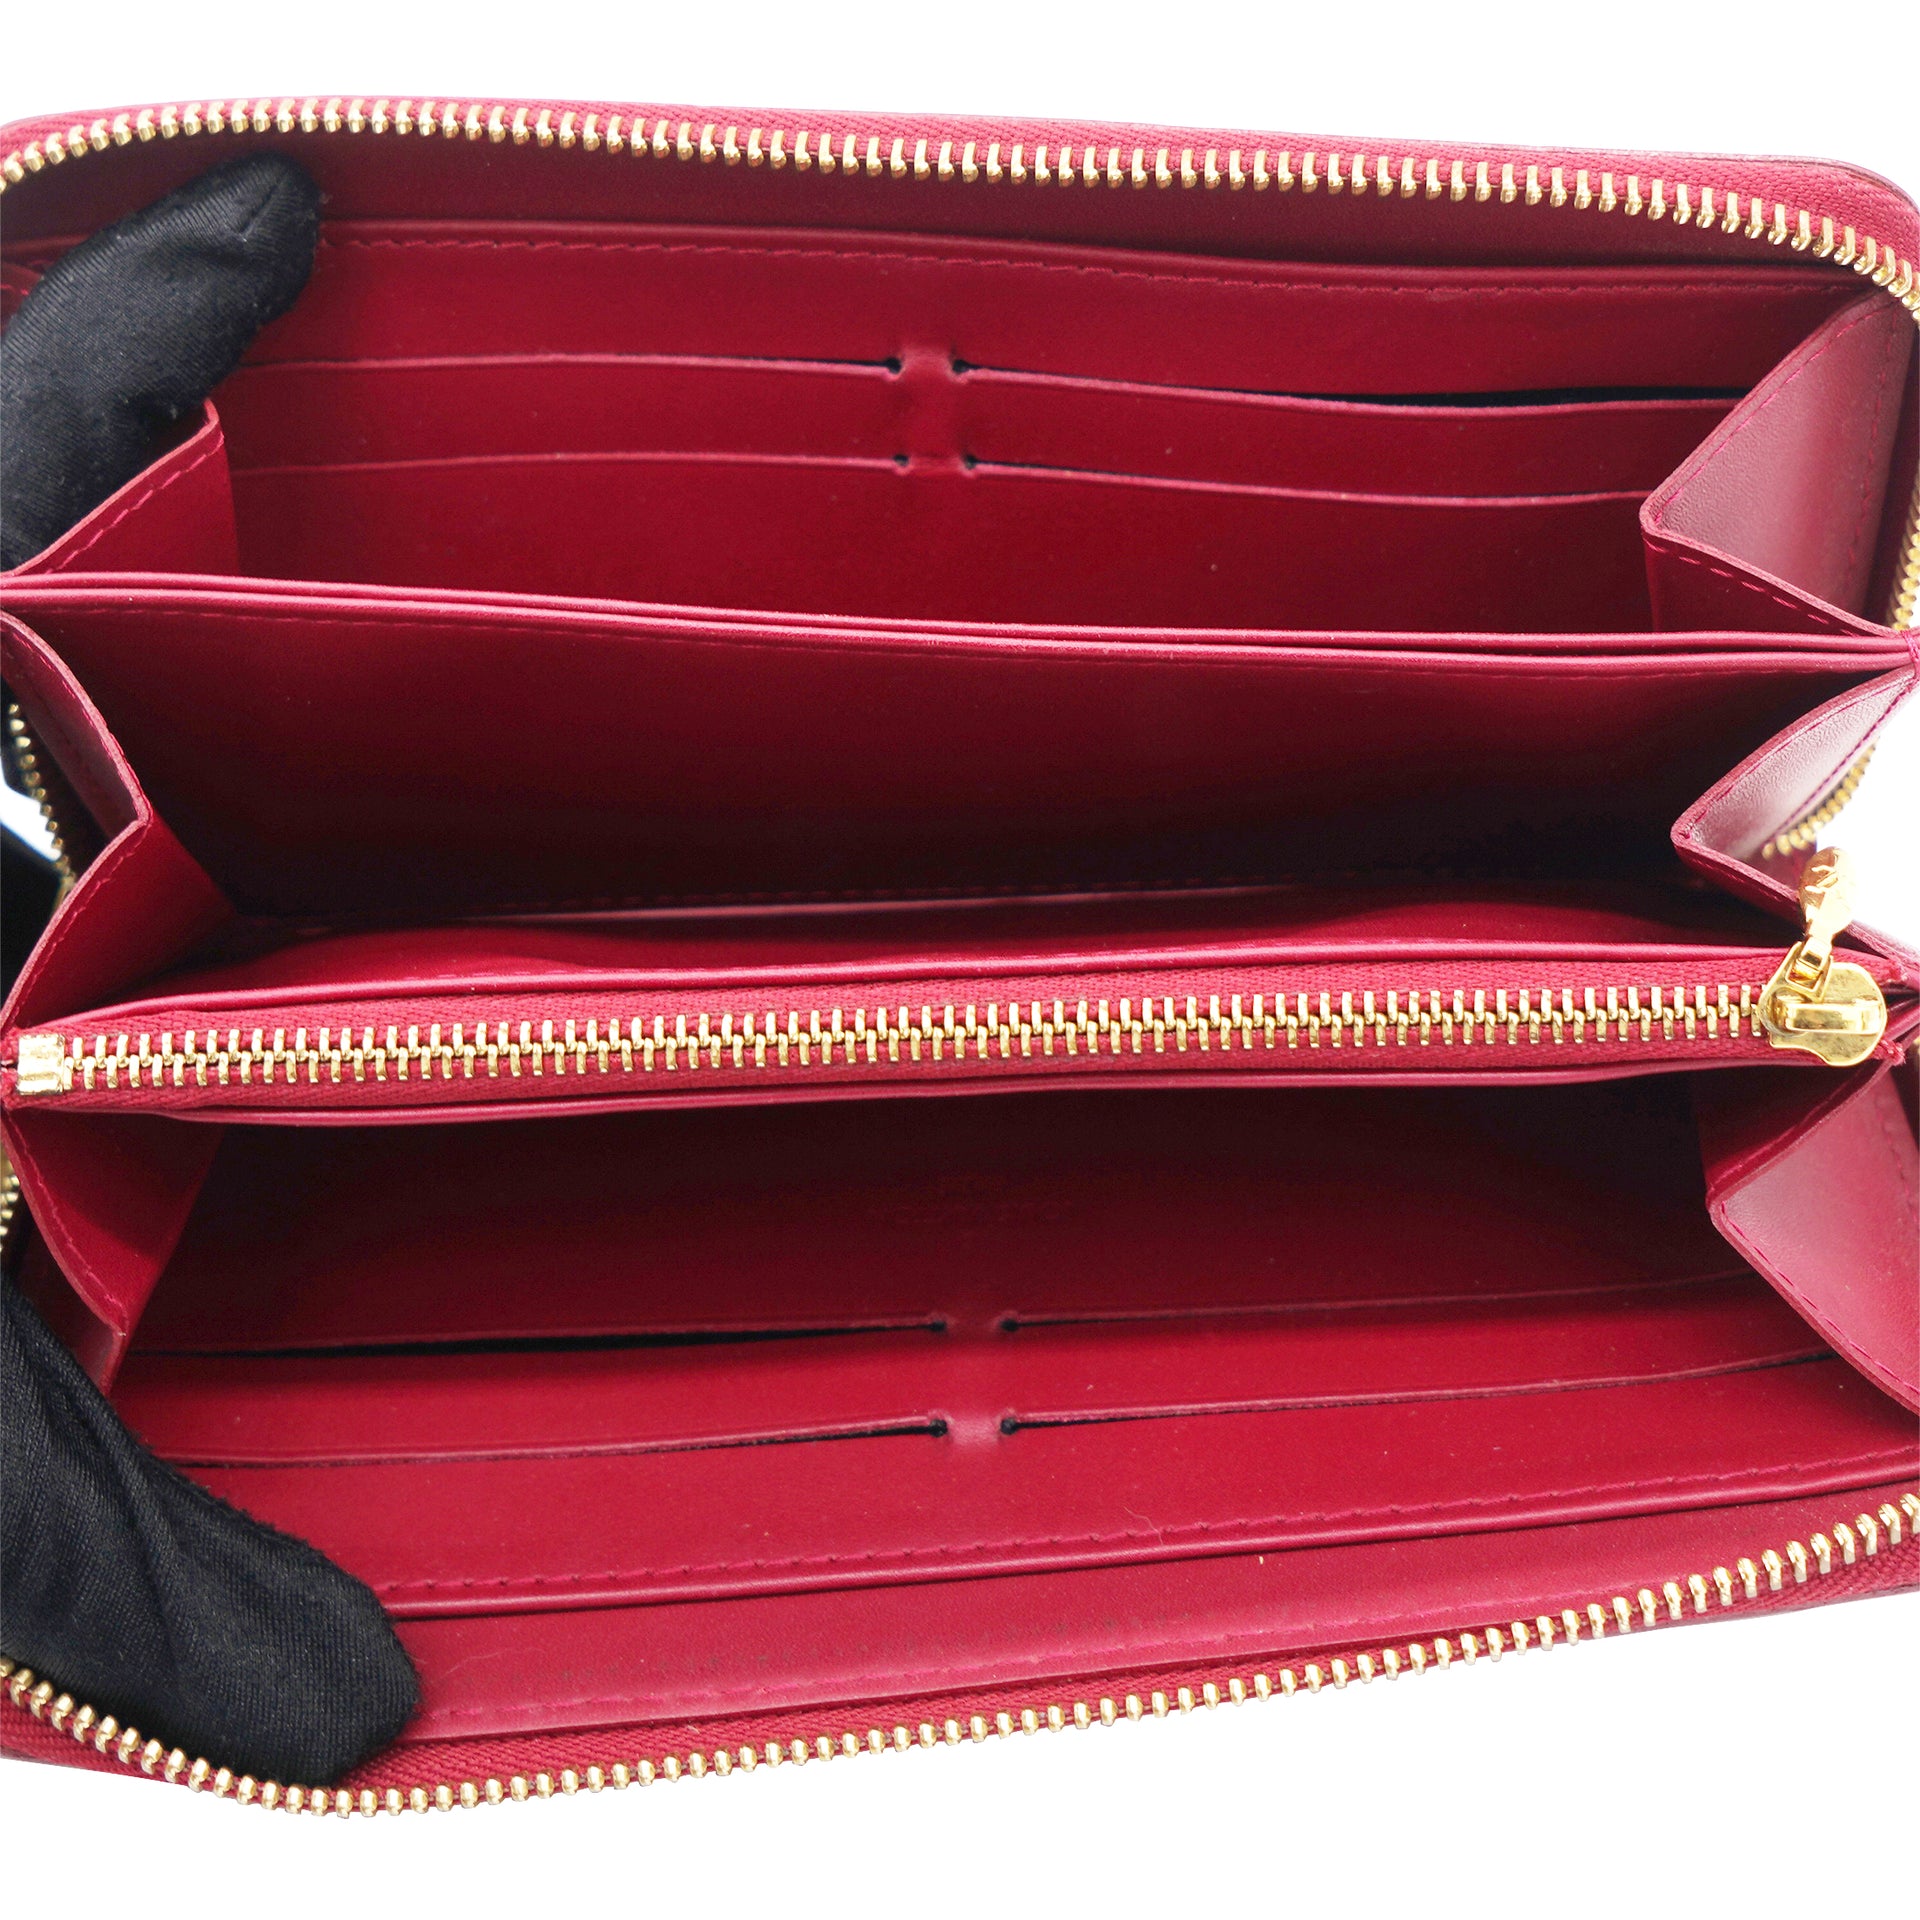 Zippy Wallet Monogram Vernis Leather - Women - Small Leather Goods